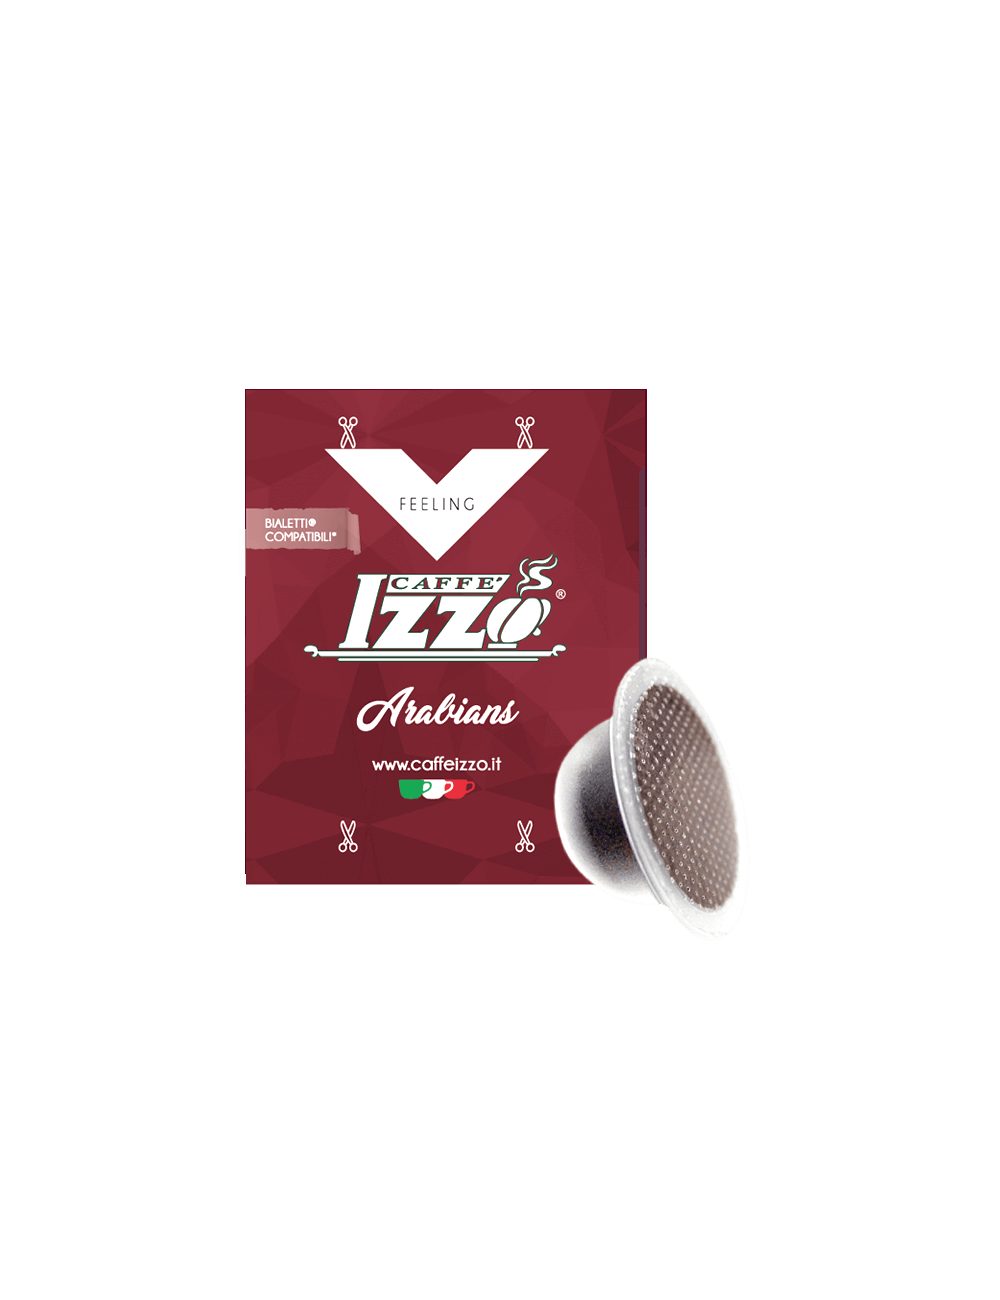 100 capsule compatibili Bialetti Caffè Izzo Arabians Caffè Izzo